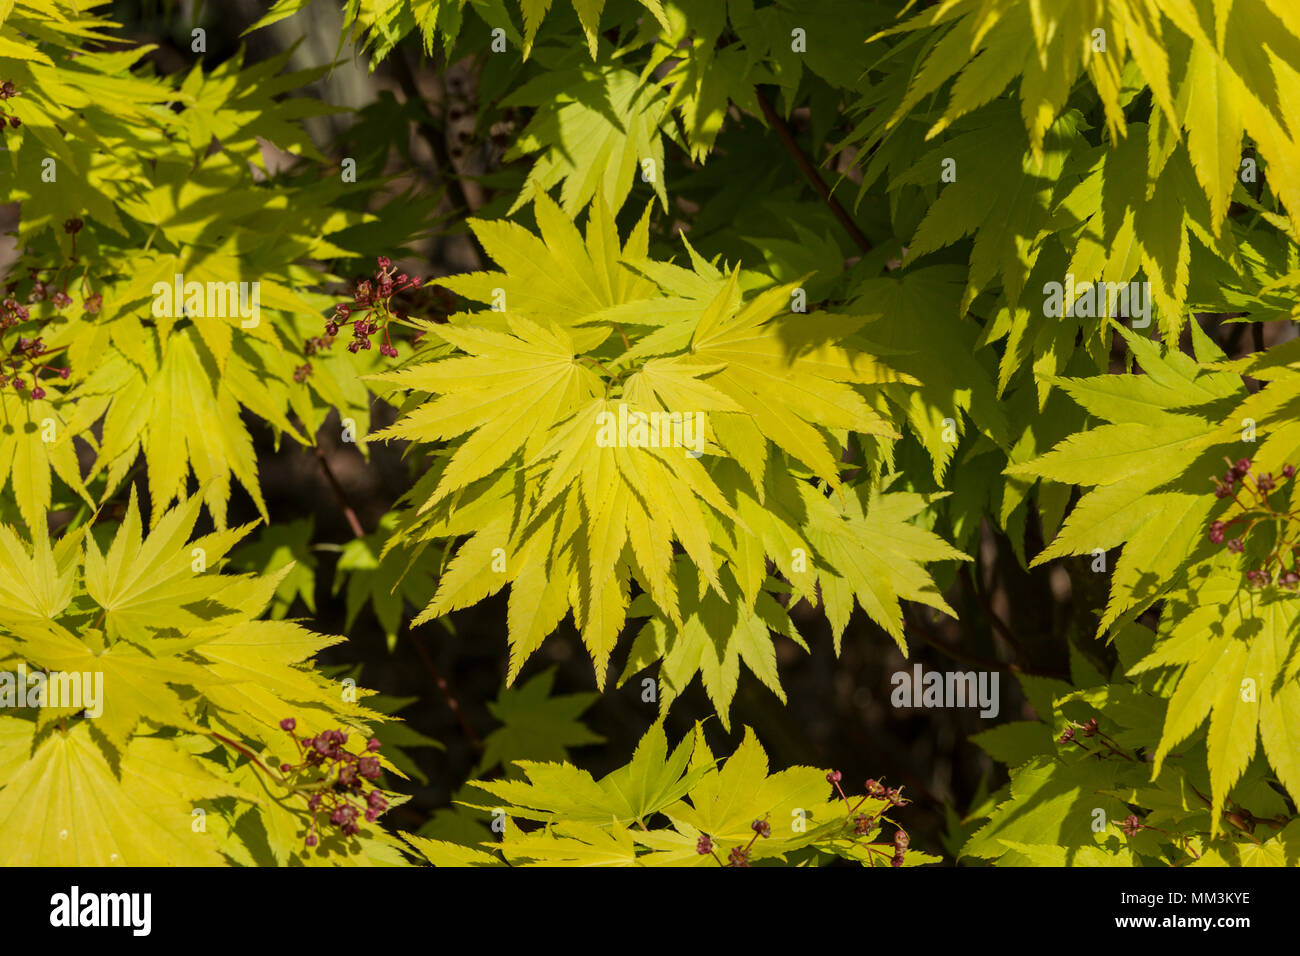 Acer tree shirasawanum jordan, a yellow leaved tree grown for it's bright coloured foliage Stock Photo